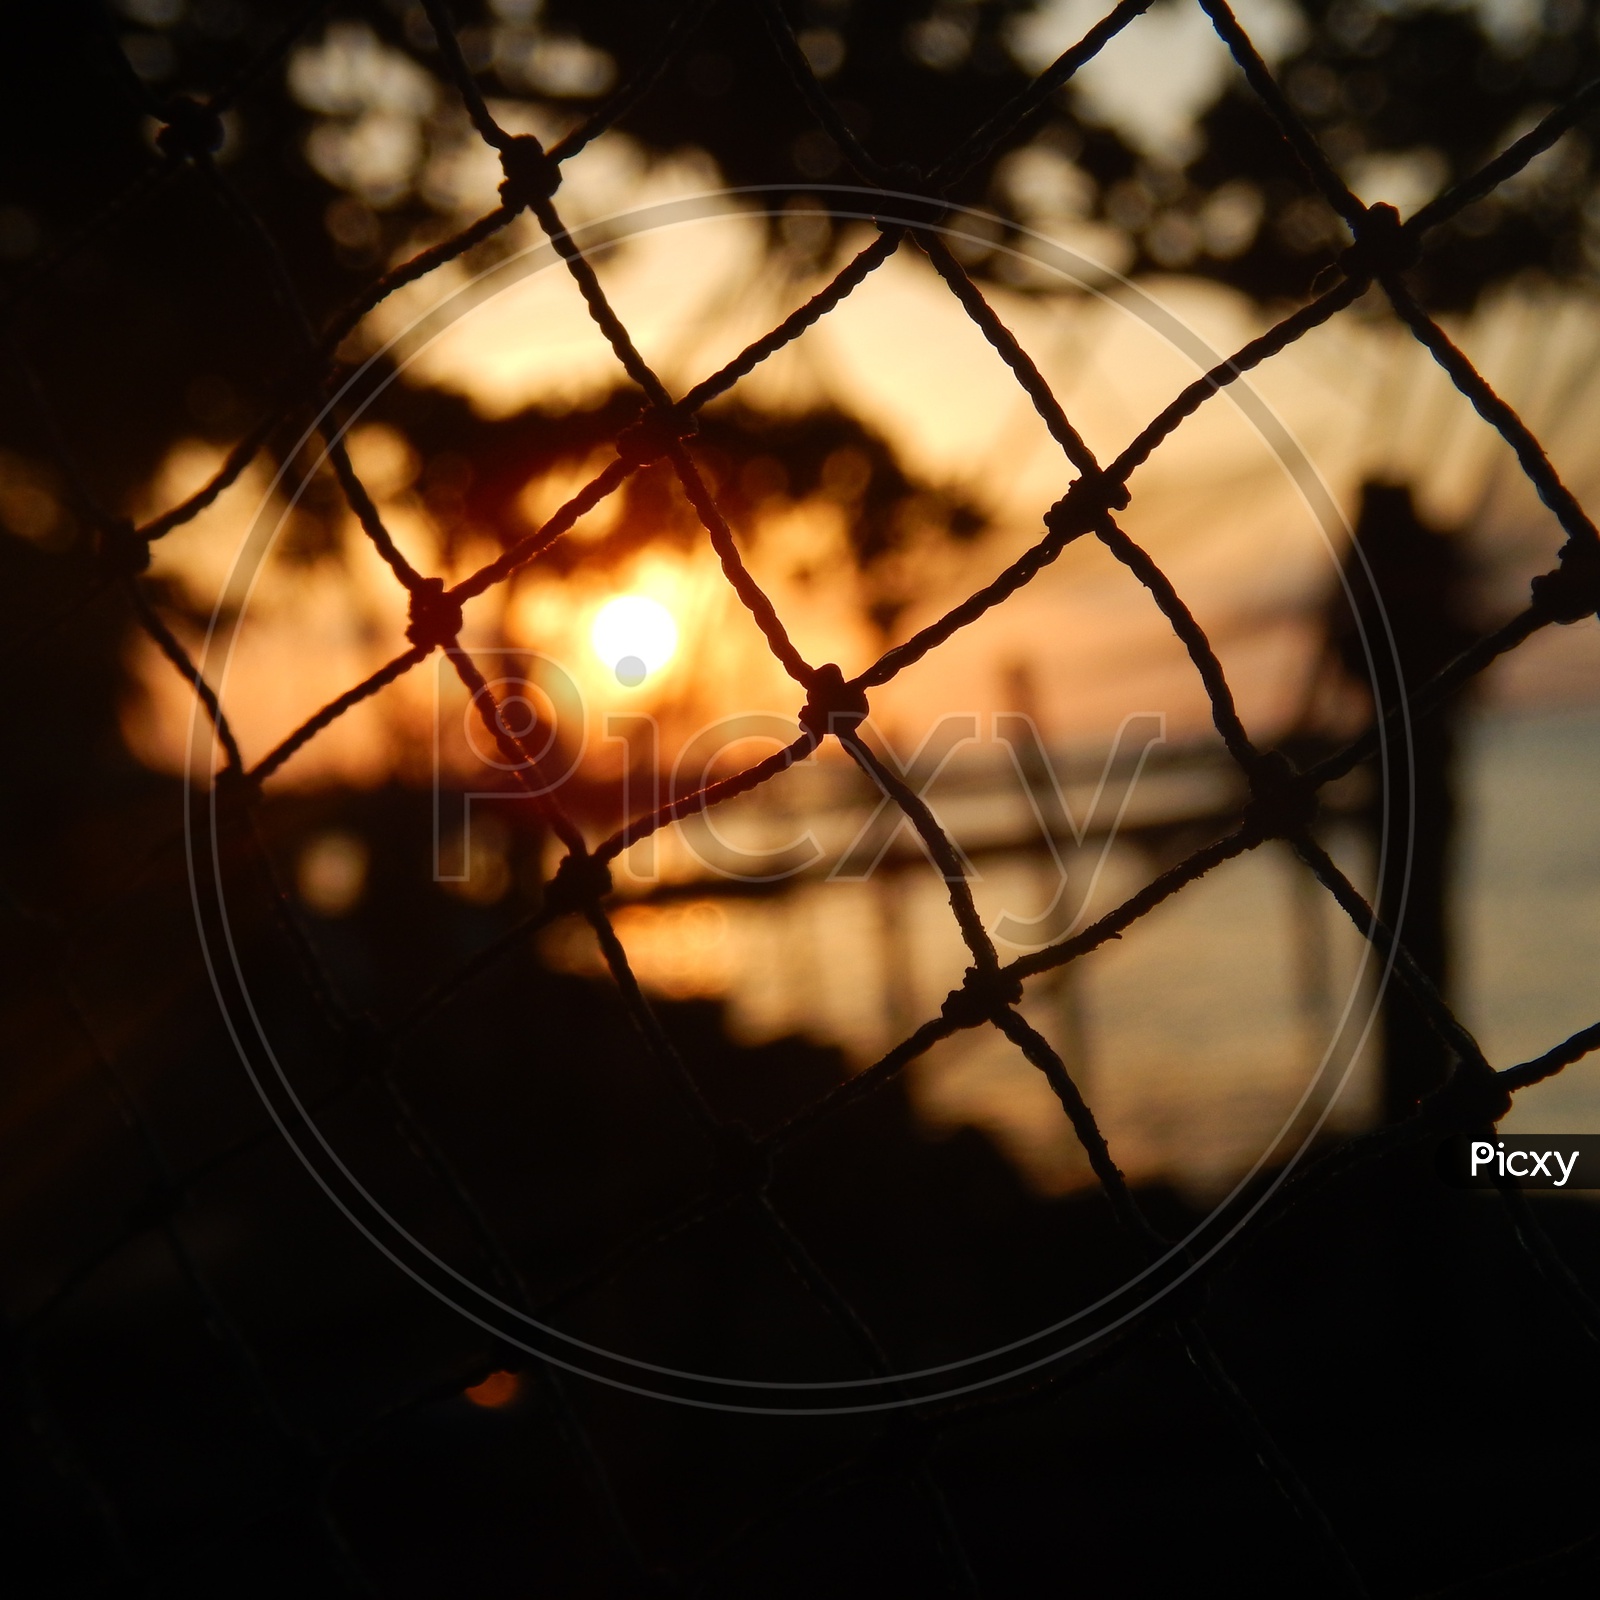 Sunrise through a net at fisherman's bay in kerala.